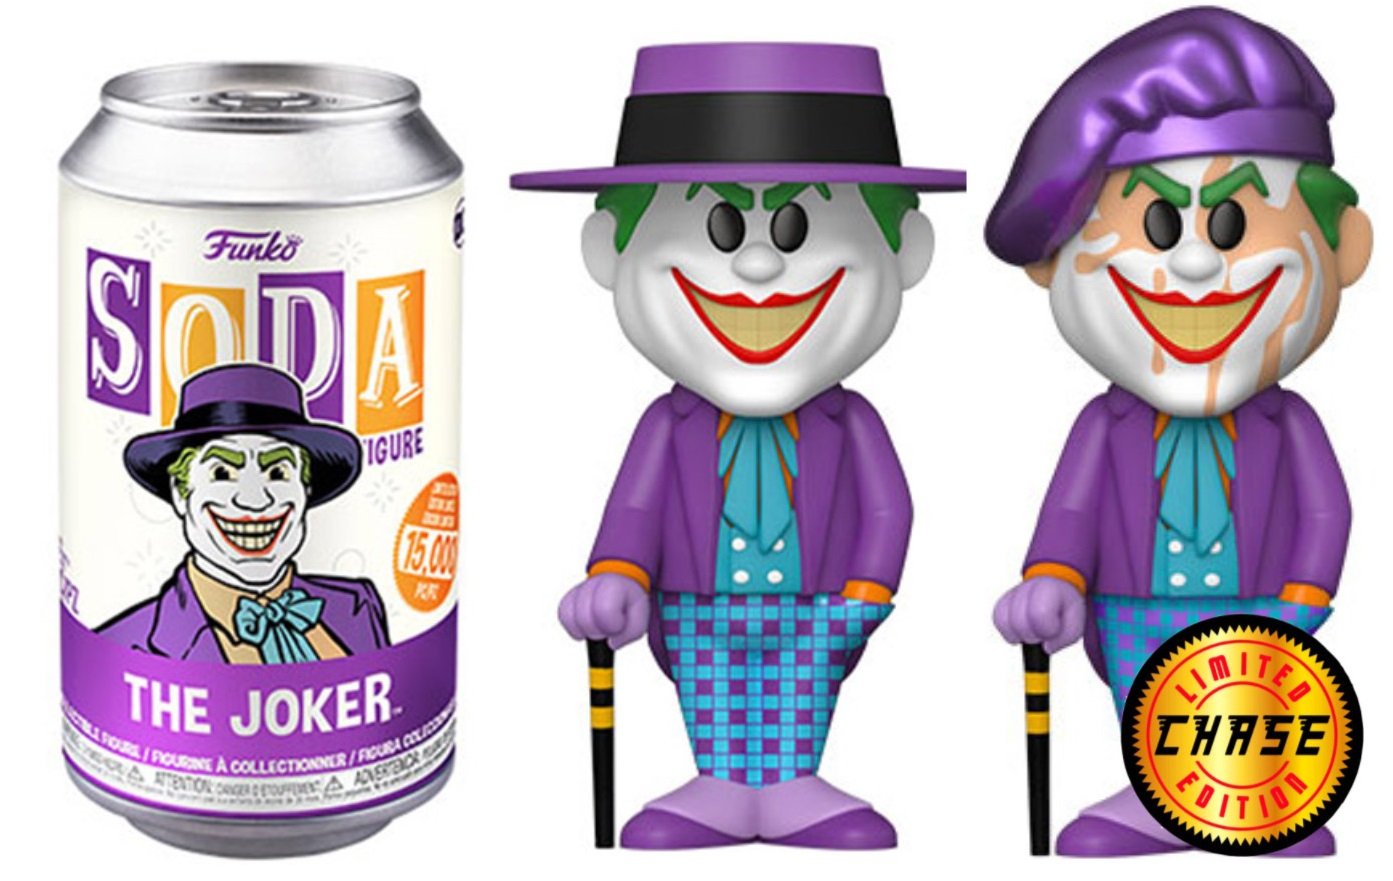 Funko Soda The Joker 1989